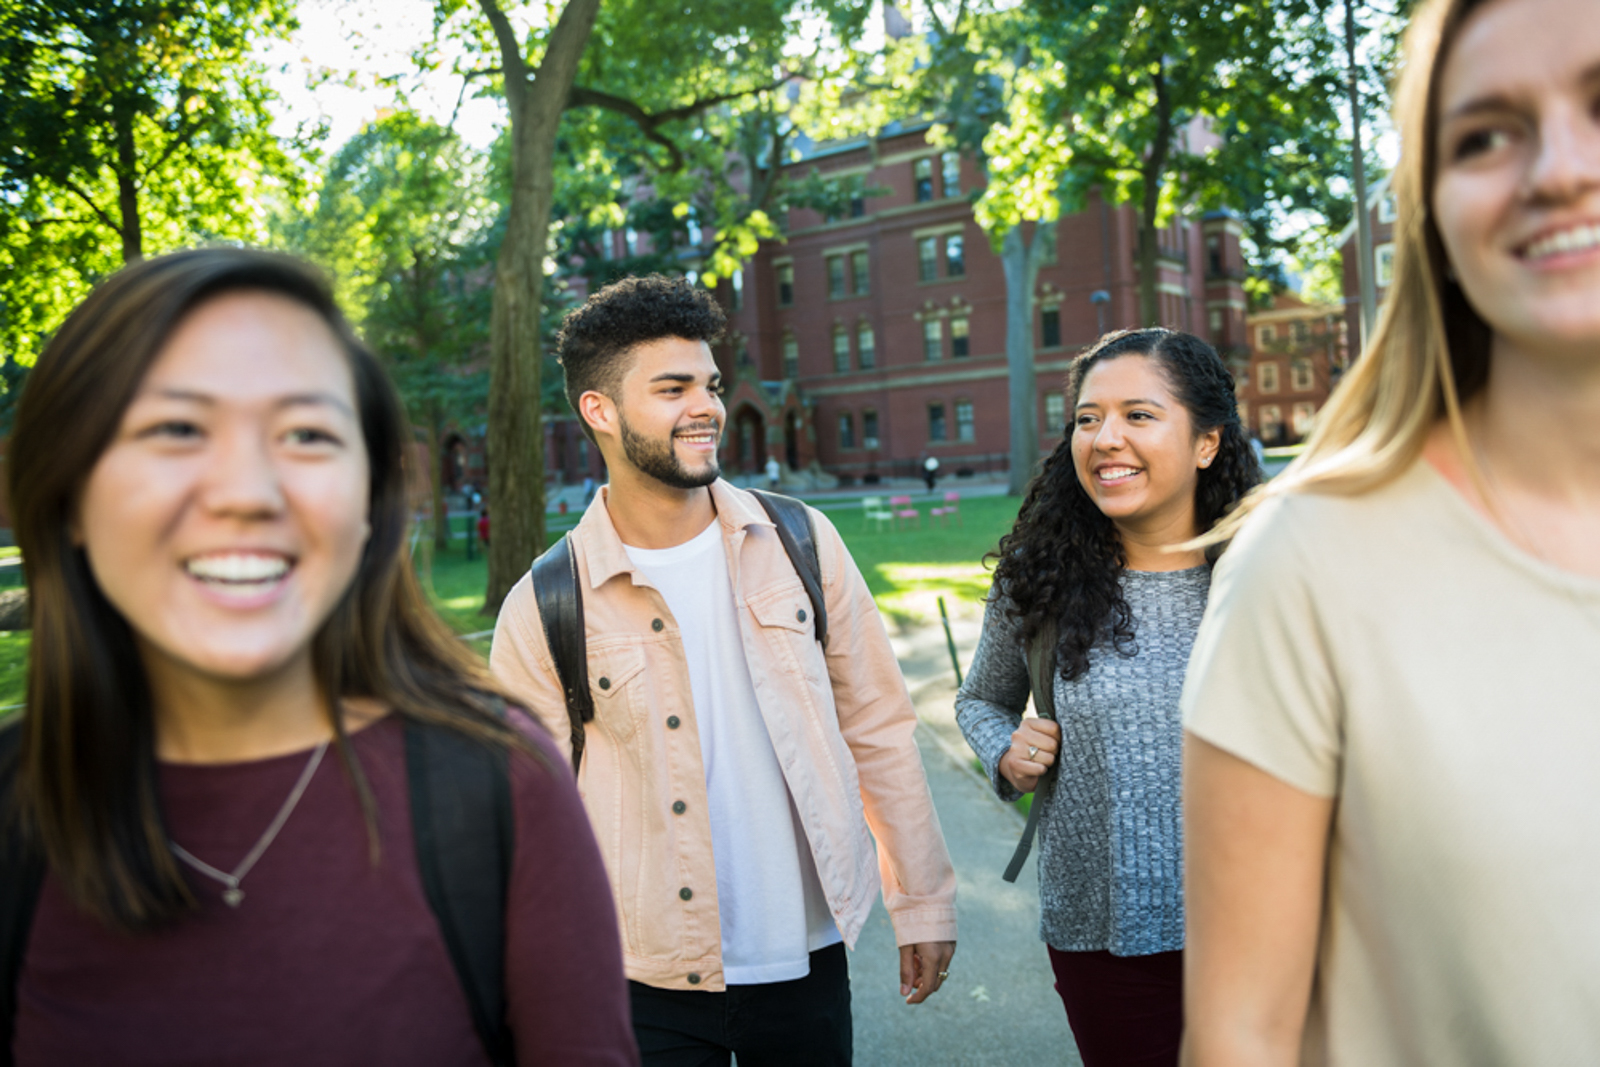 Students walking around campus smiling